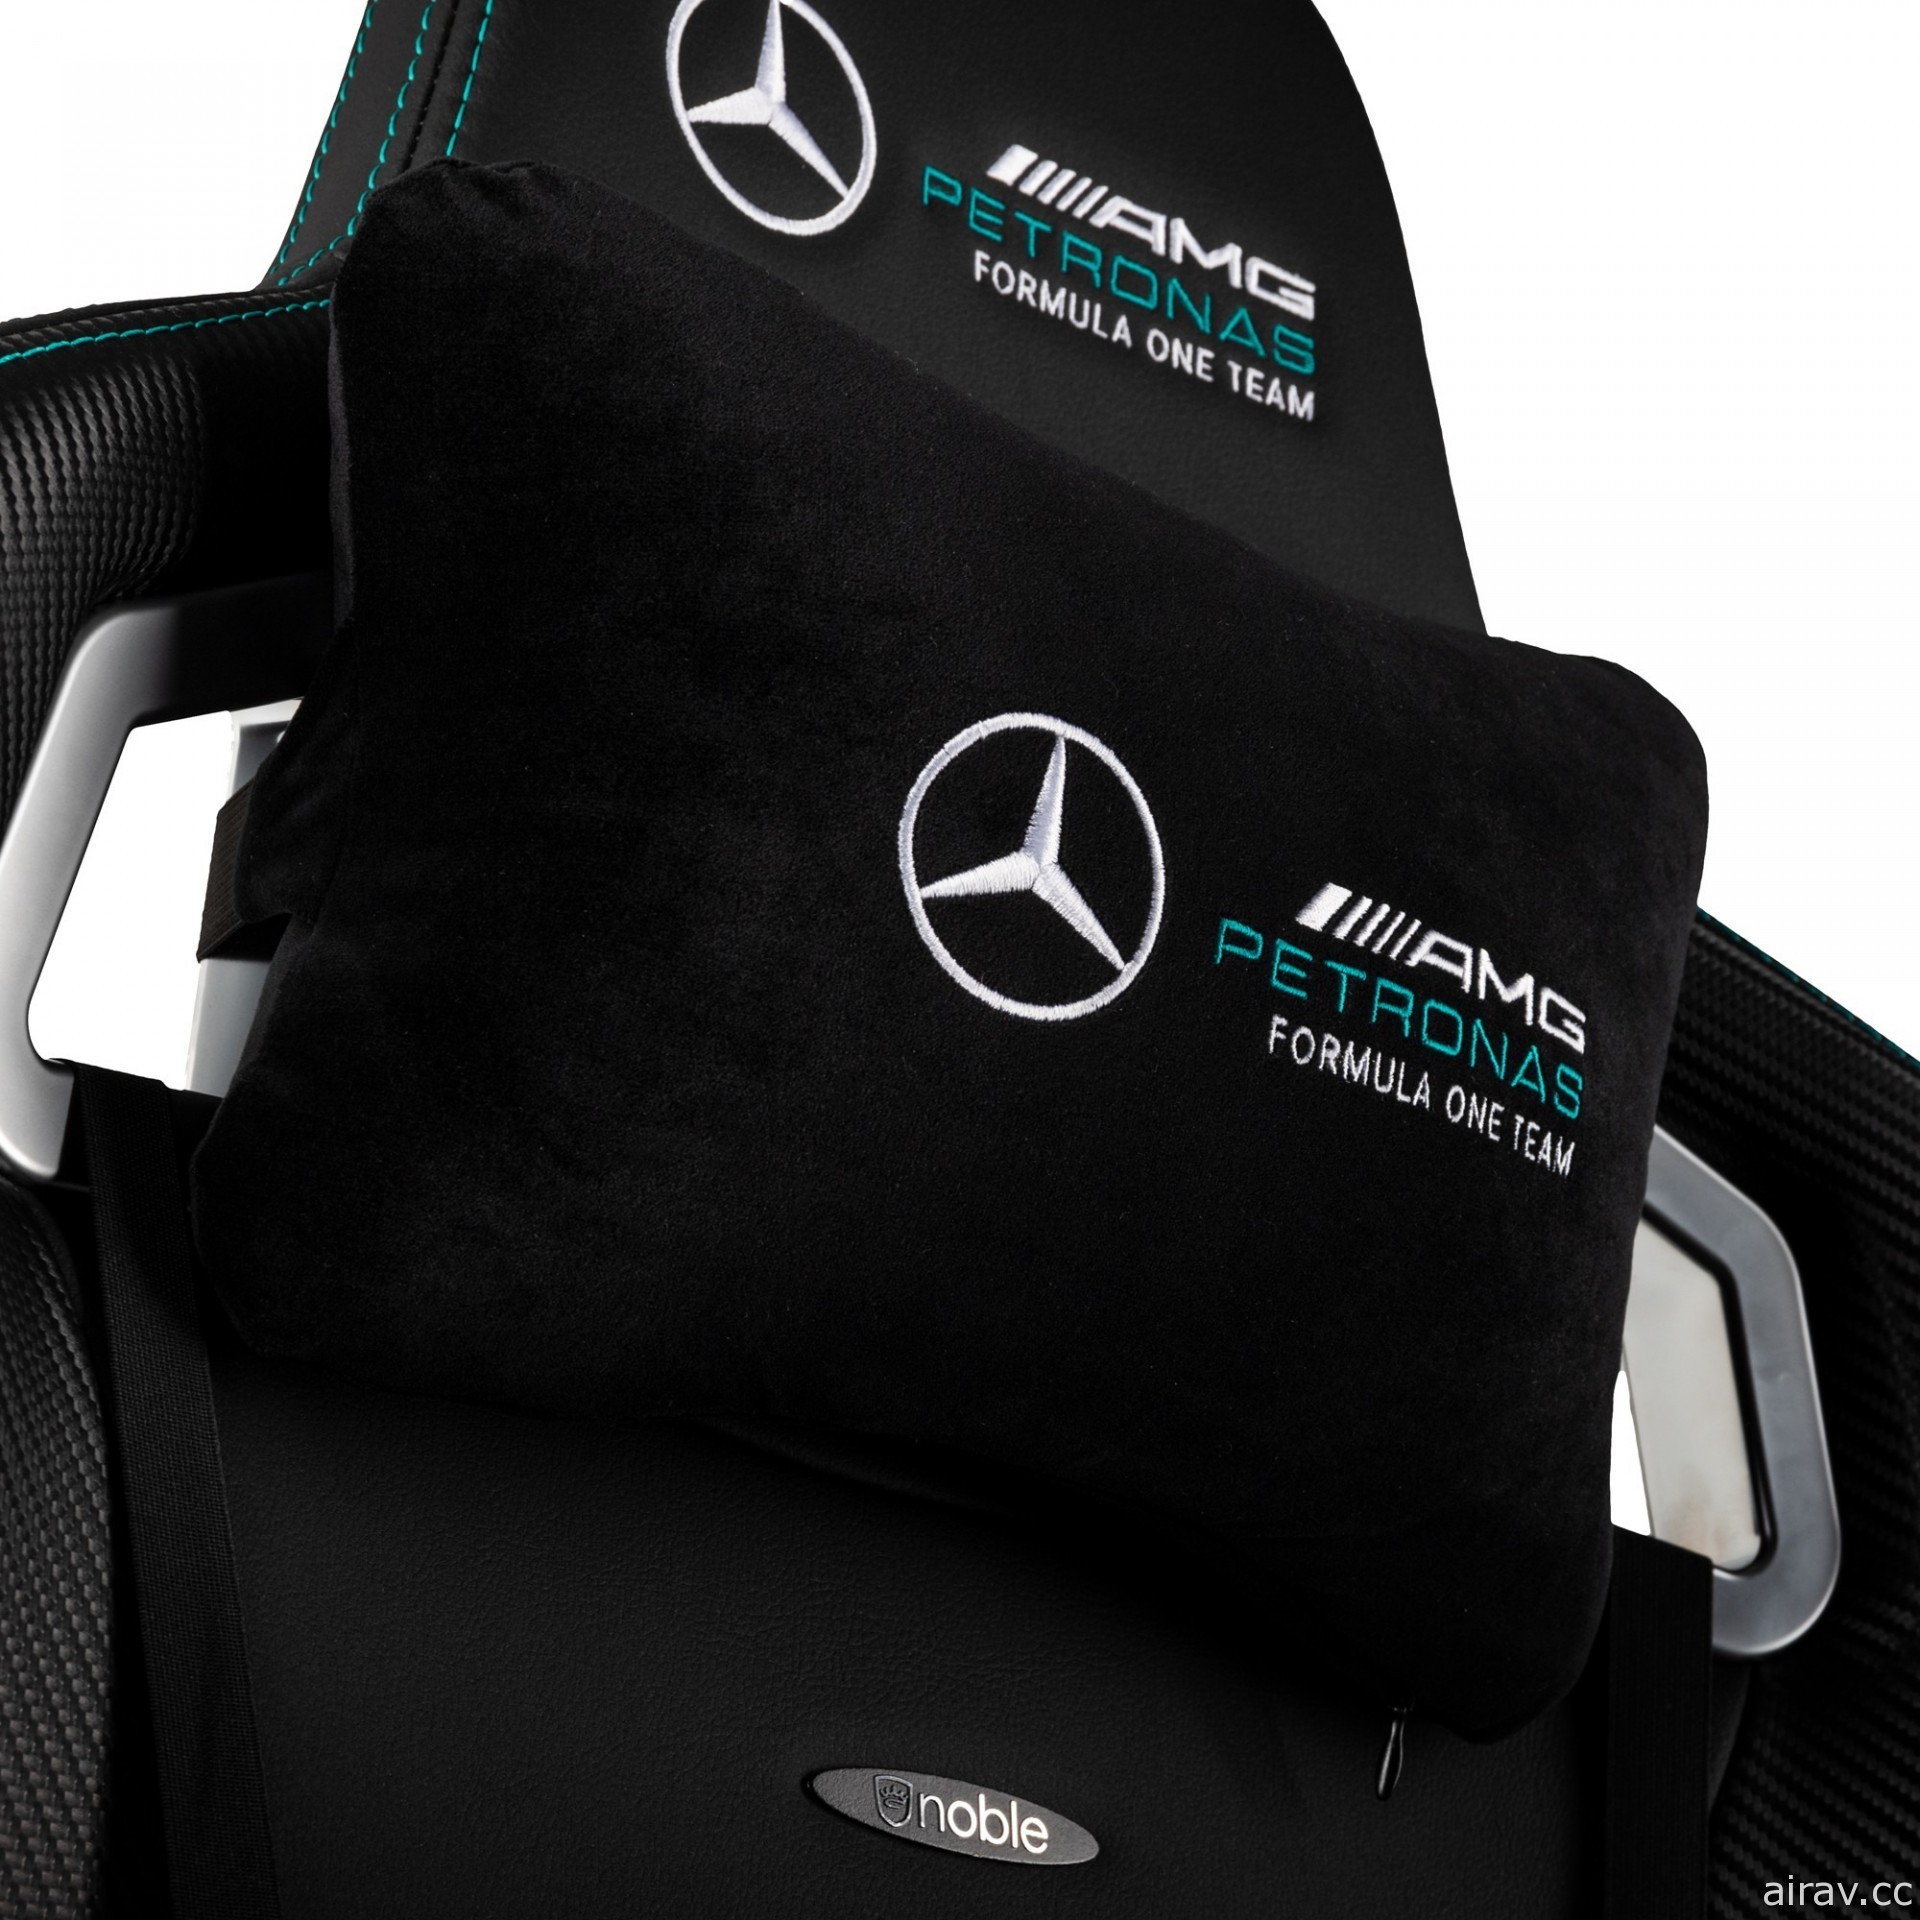 noblechairs 與賓士 AMG F1 冠軍隊伍再次合作 推出新款電競賽車椅